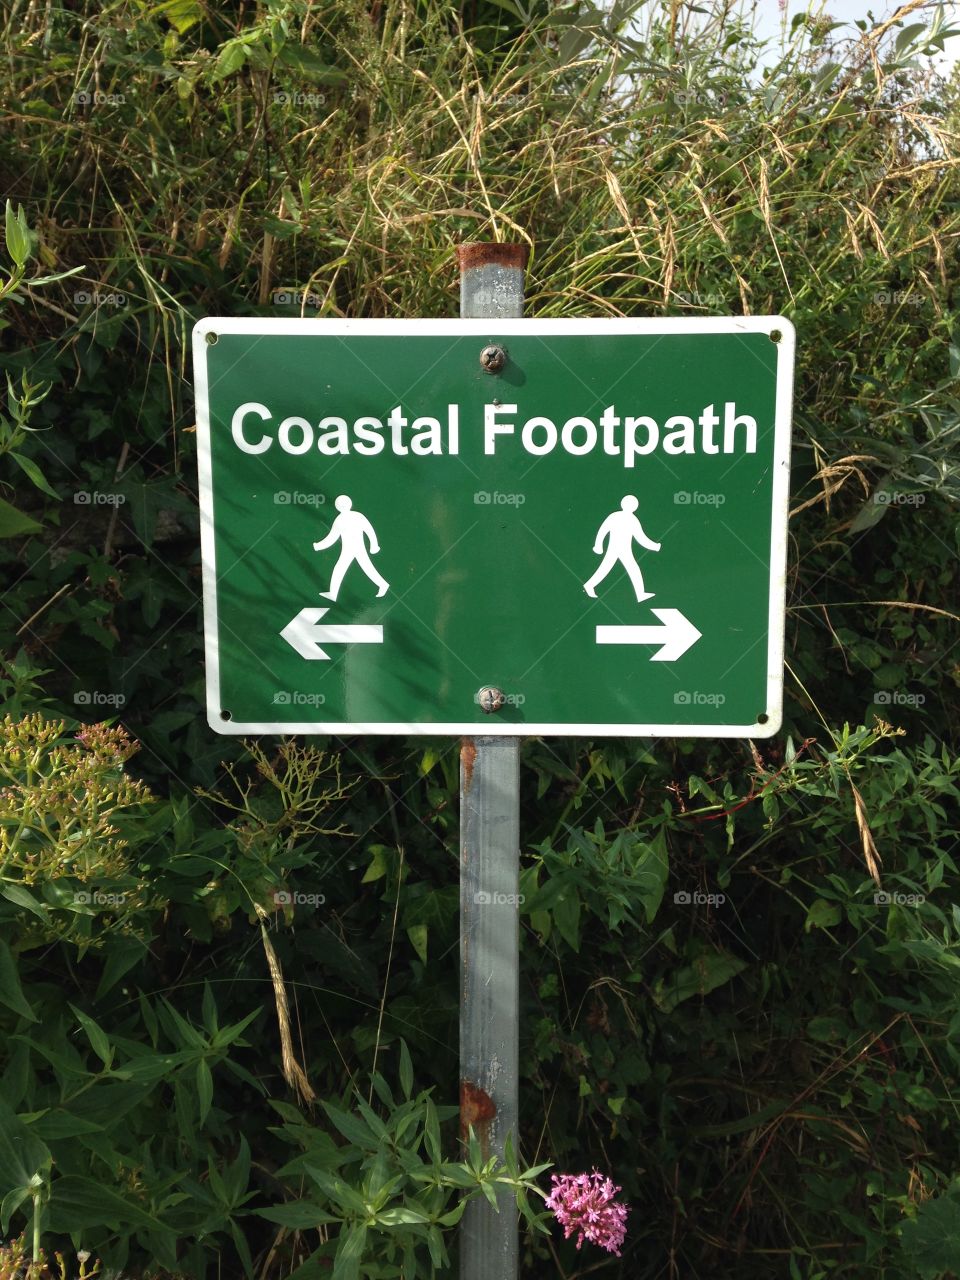 Hiking the coastal path